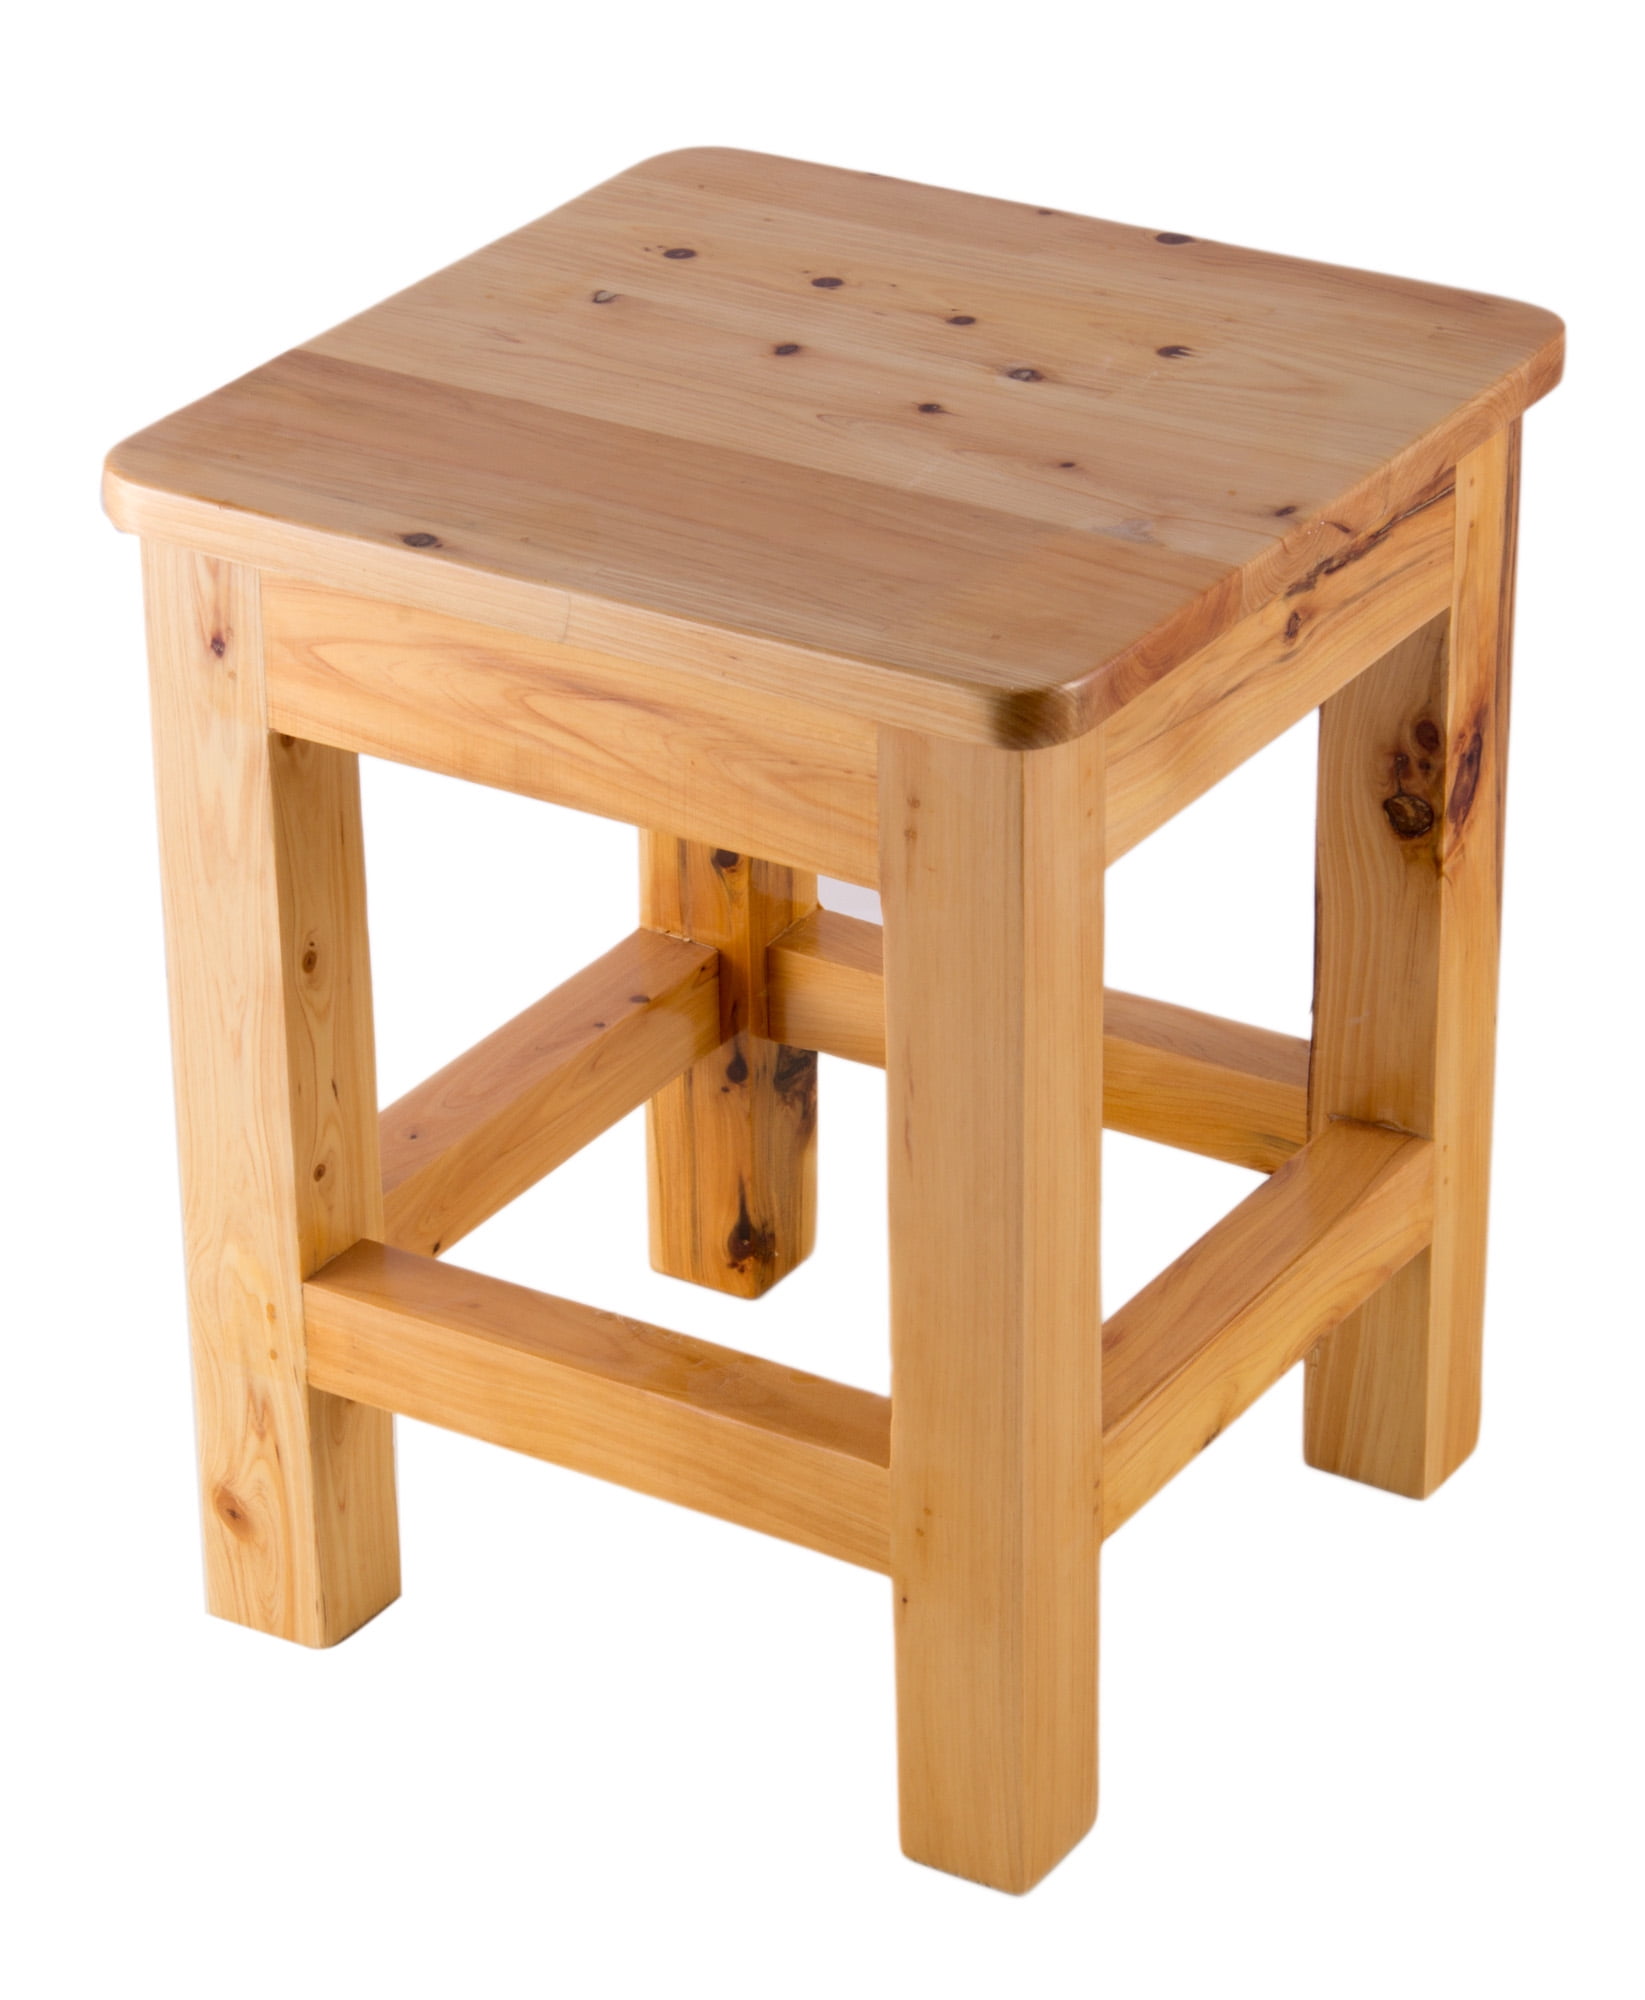 10 X 10 In. Square Wooden Bench & Stool Multi-purpose Accessory